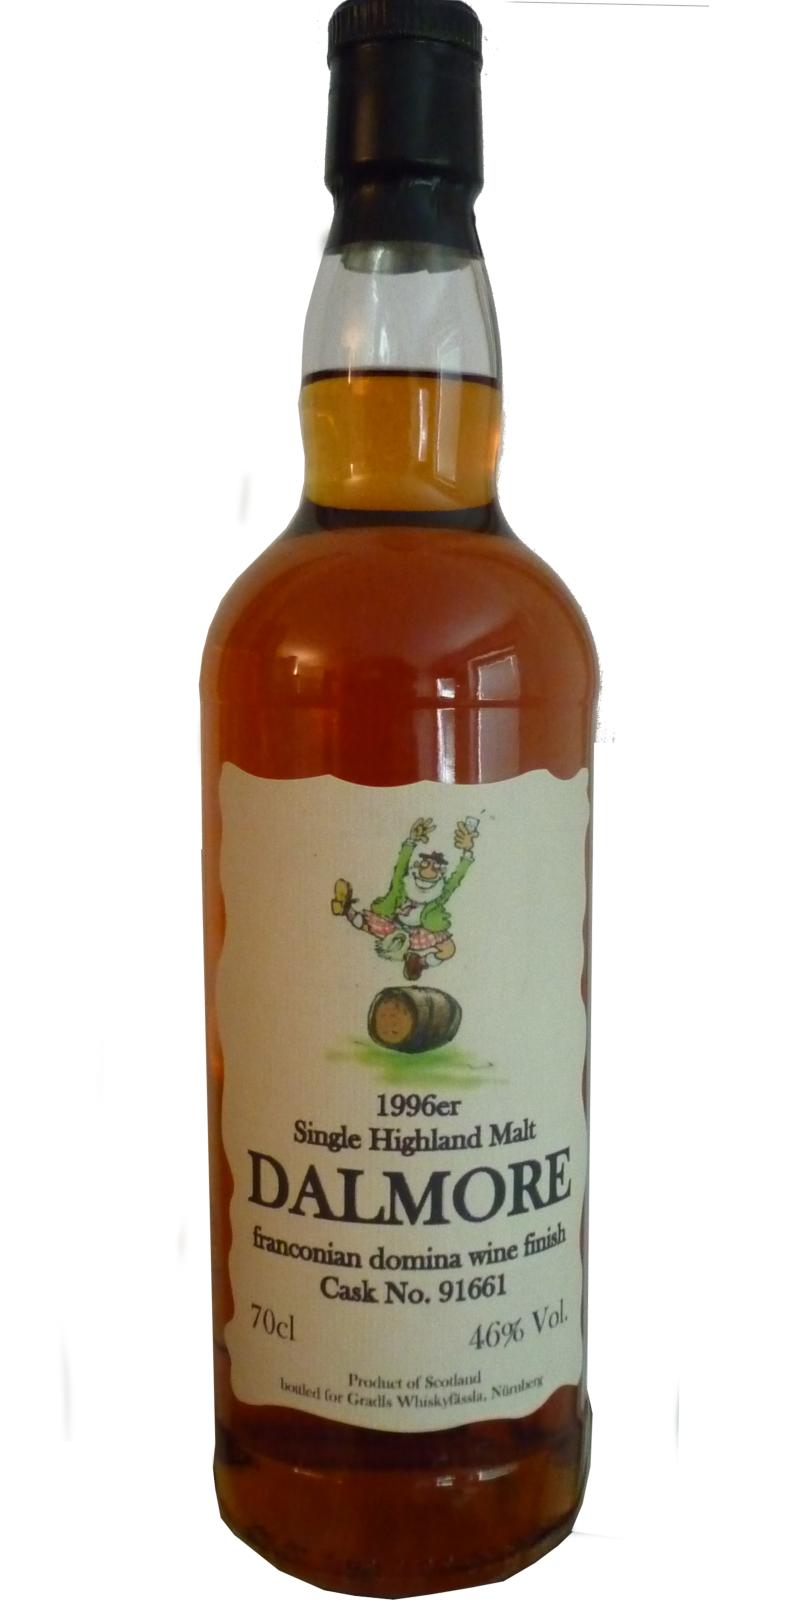 Dalmore 1996 GWf Franconian Domina Wine Finish #91661 46% 700ml